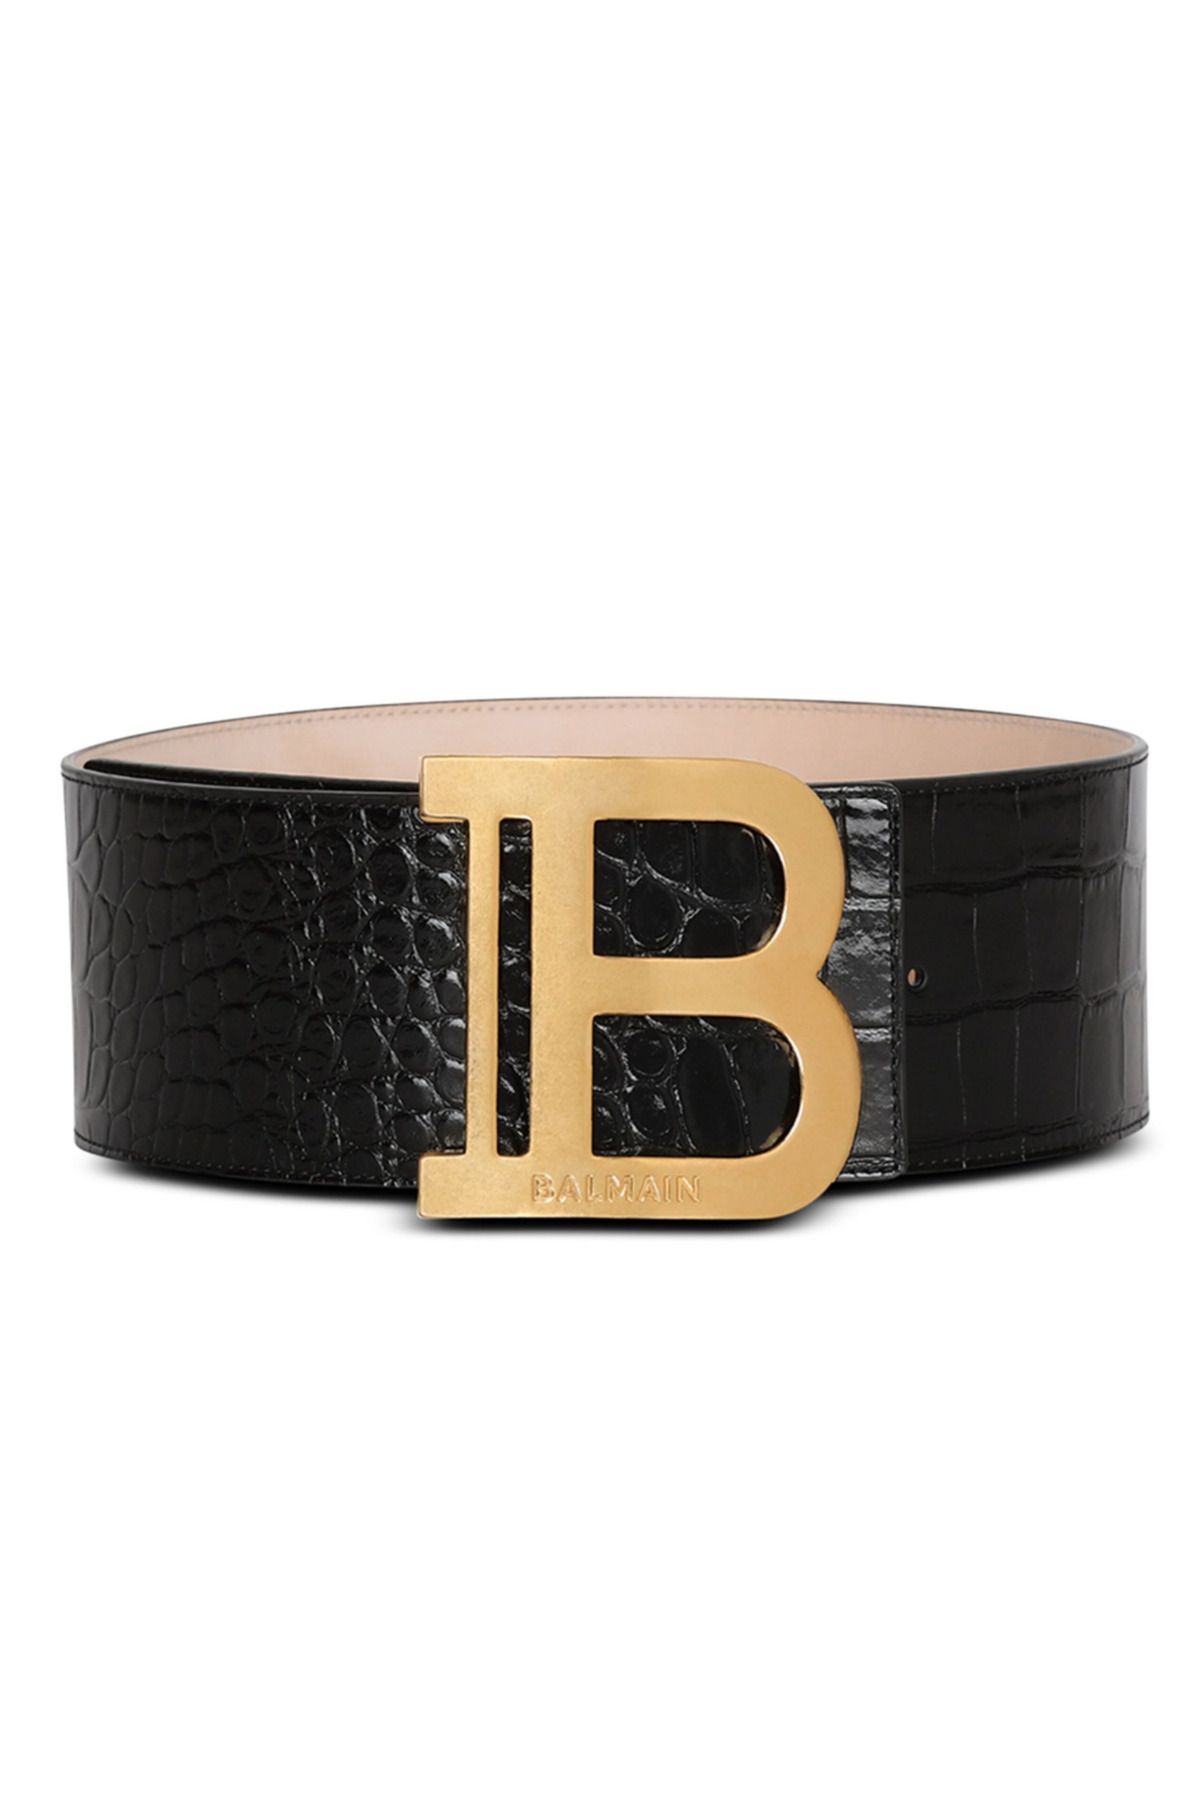 BALMAIN Leather Croc-Embossed Logo Belt